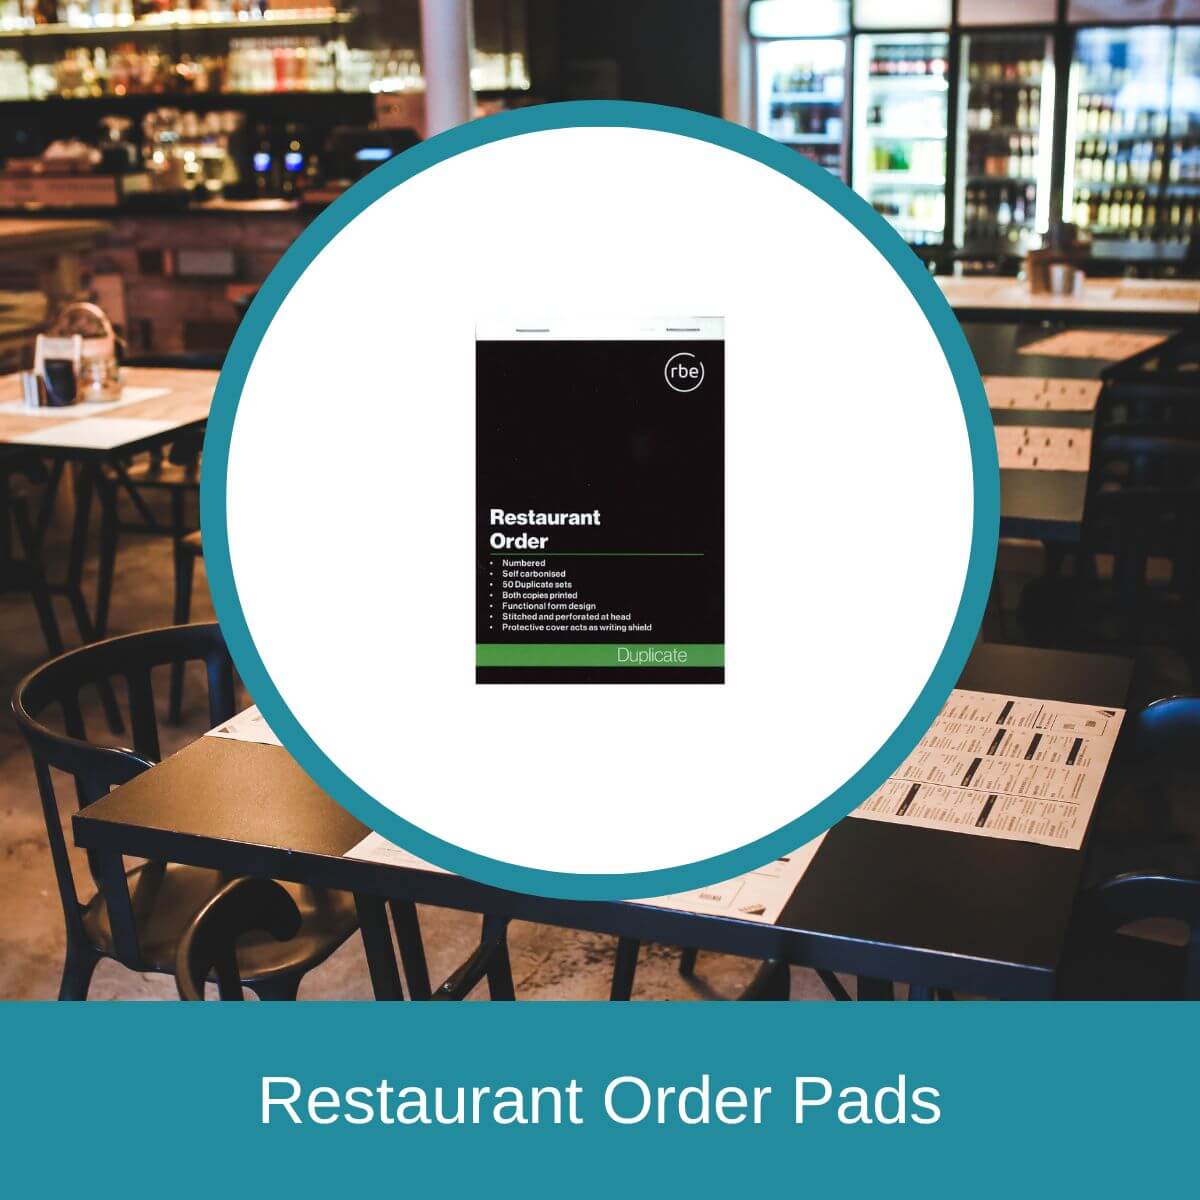 Restaurant Order Pad Options